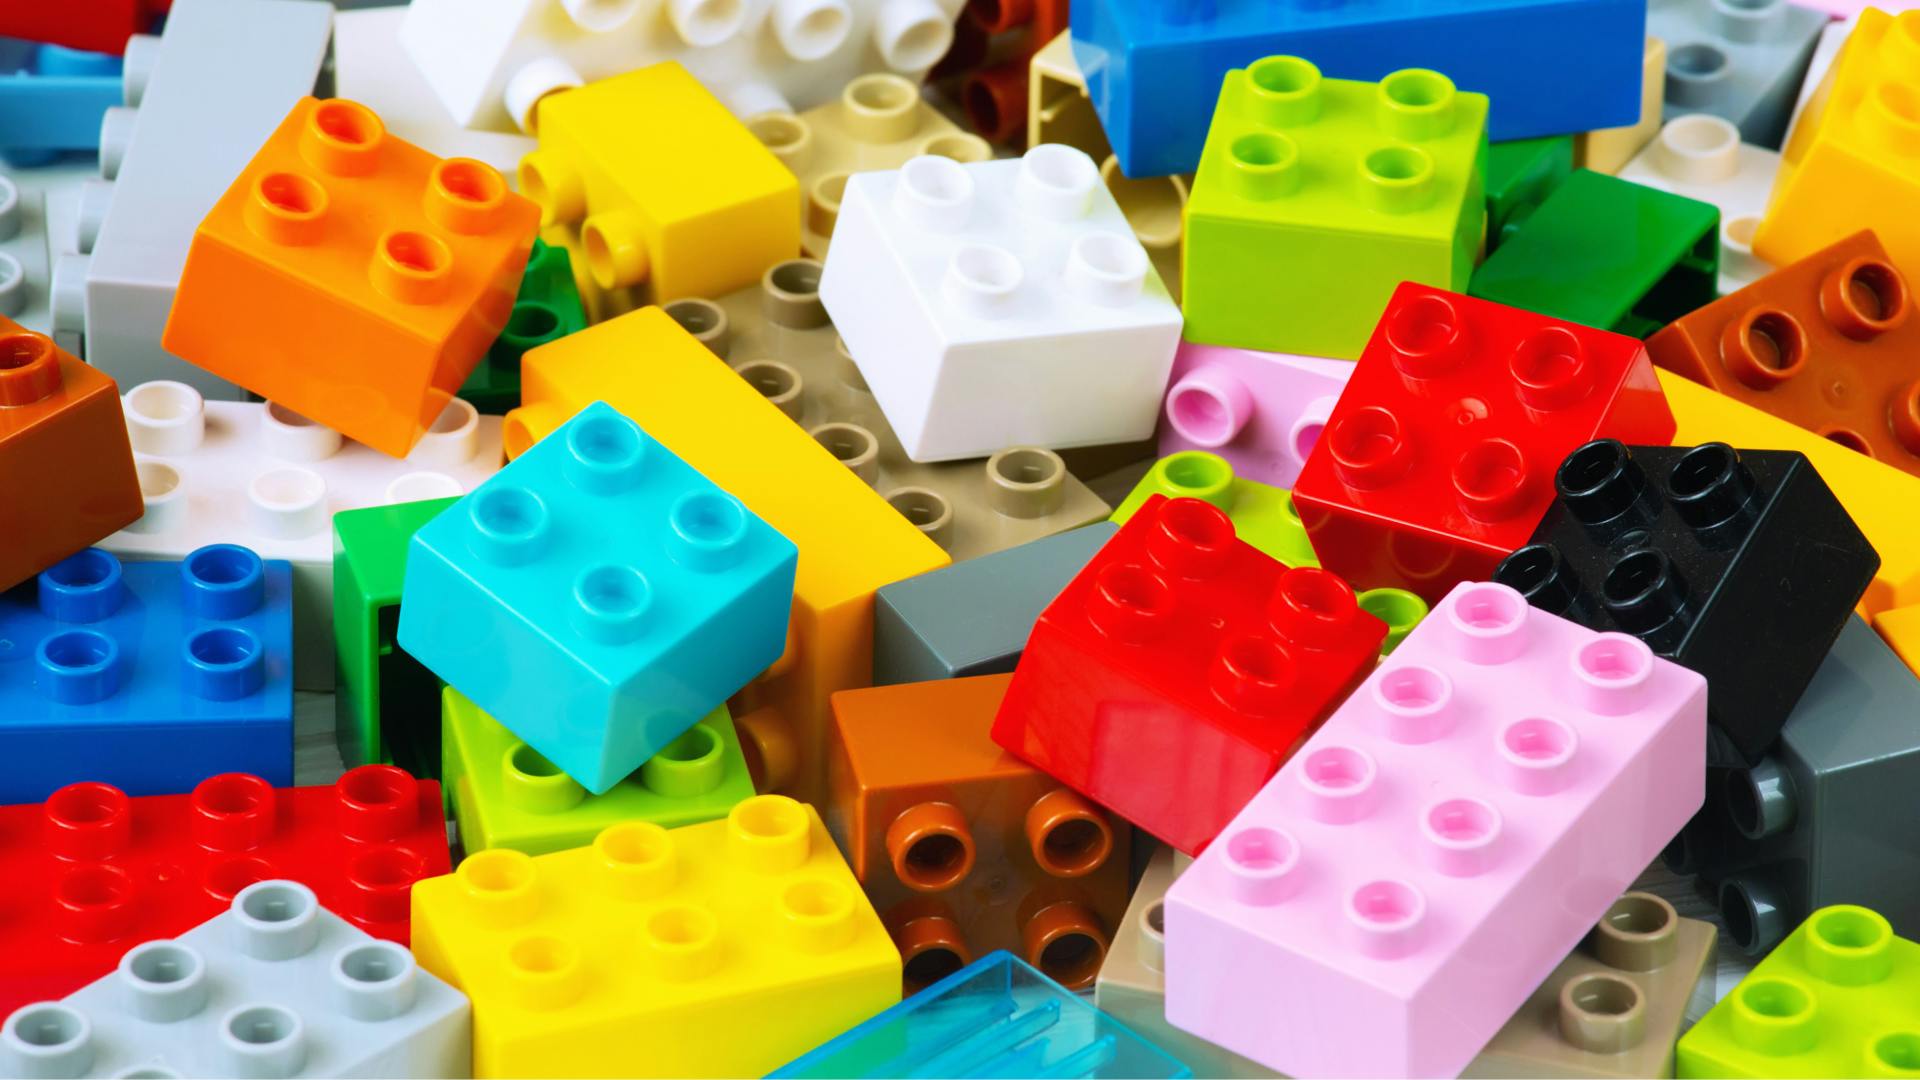 Bricks of Lego spread around. 